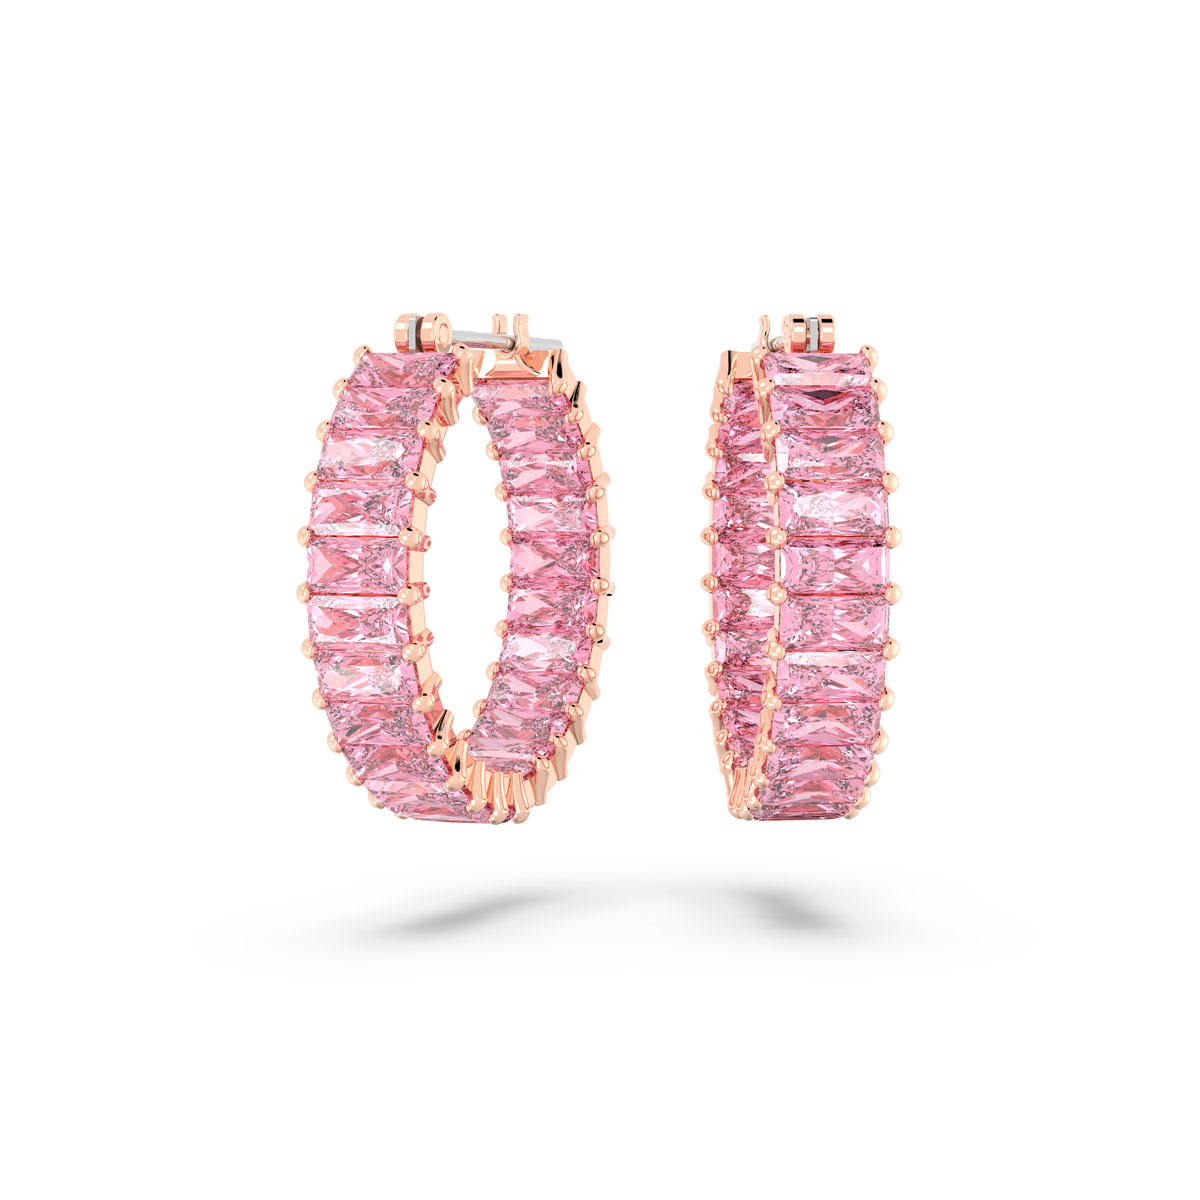 Swarovski Jewelry Matrix Pink and Rose Gold Hoop Pierced Earrings, Pair